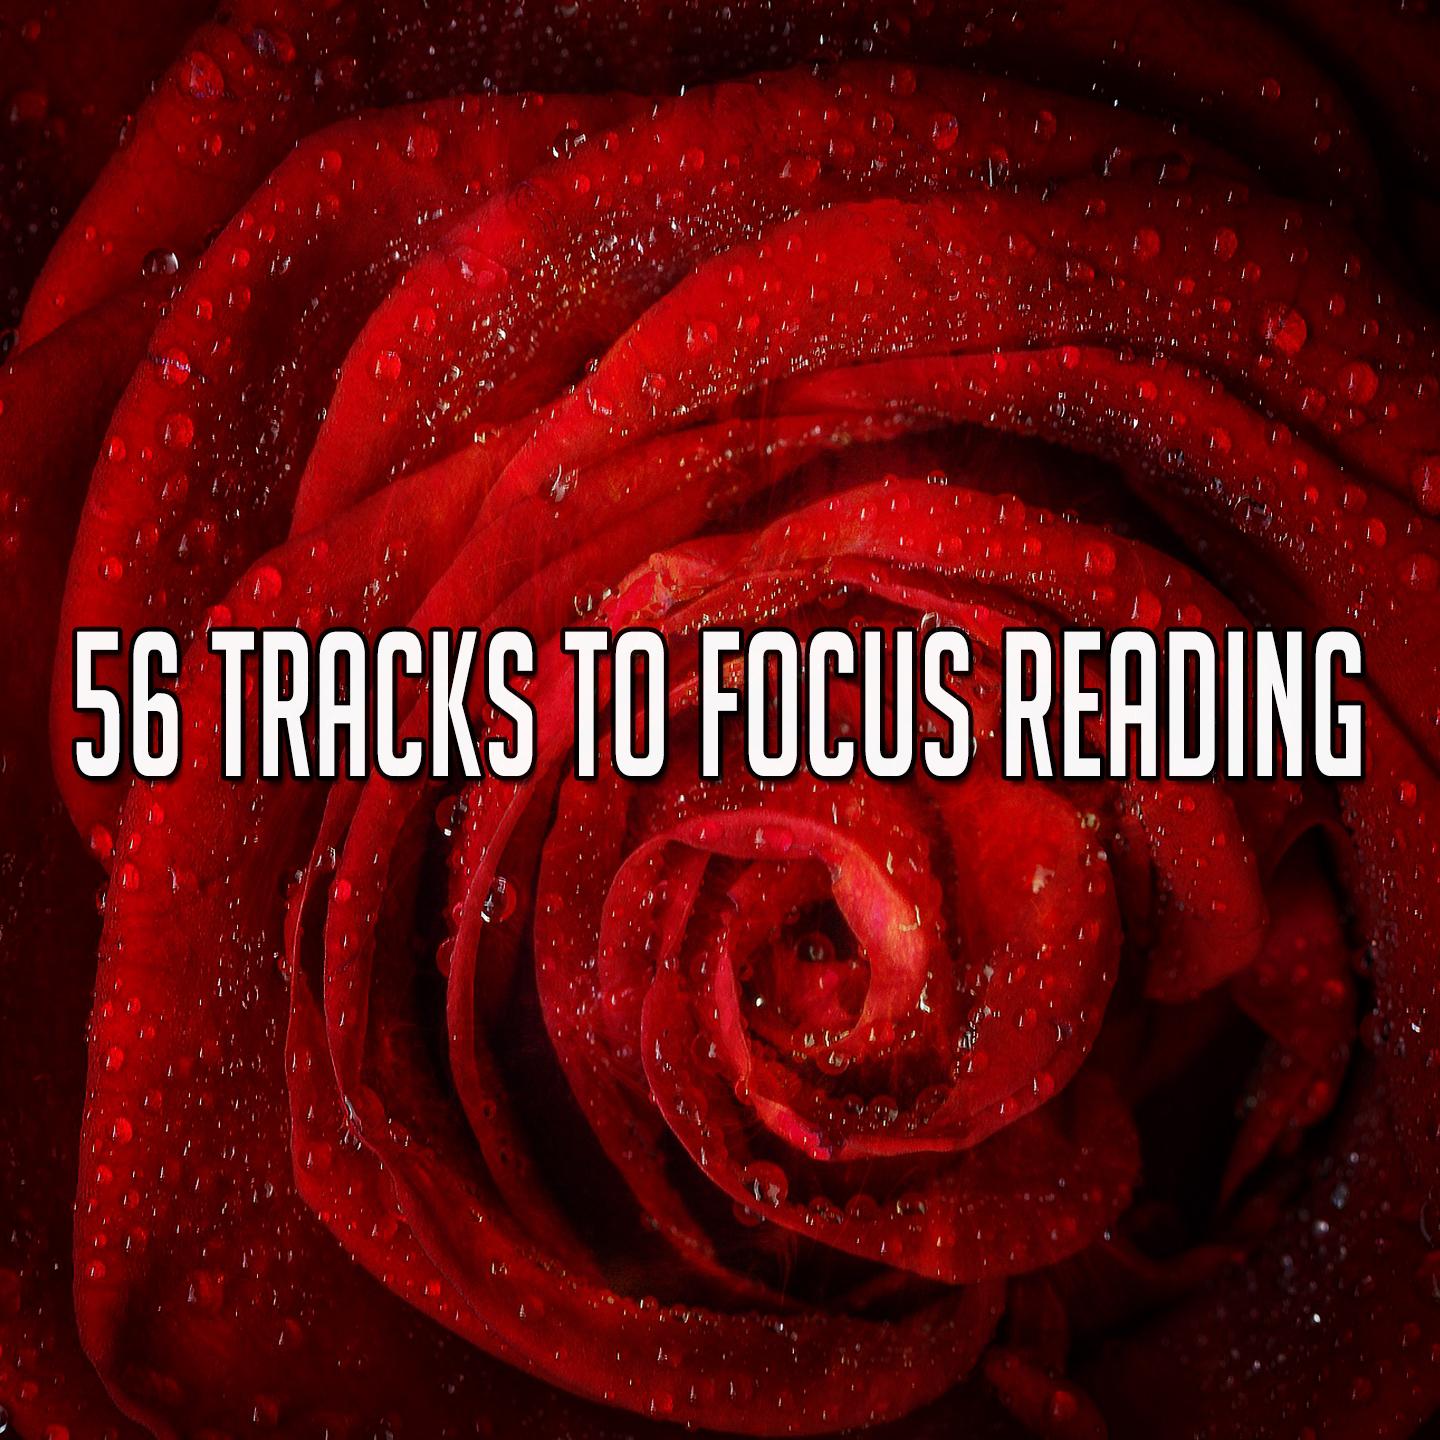 56 Tracks to Focus Reading